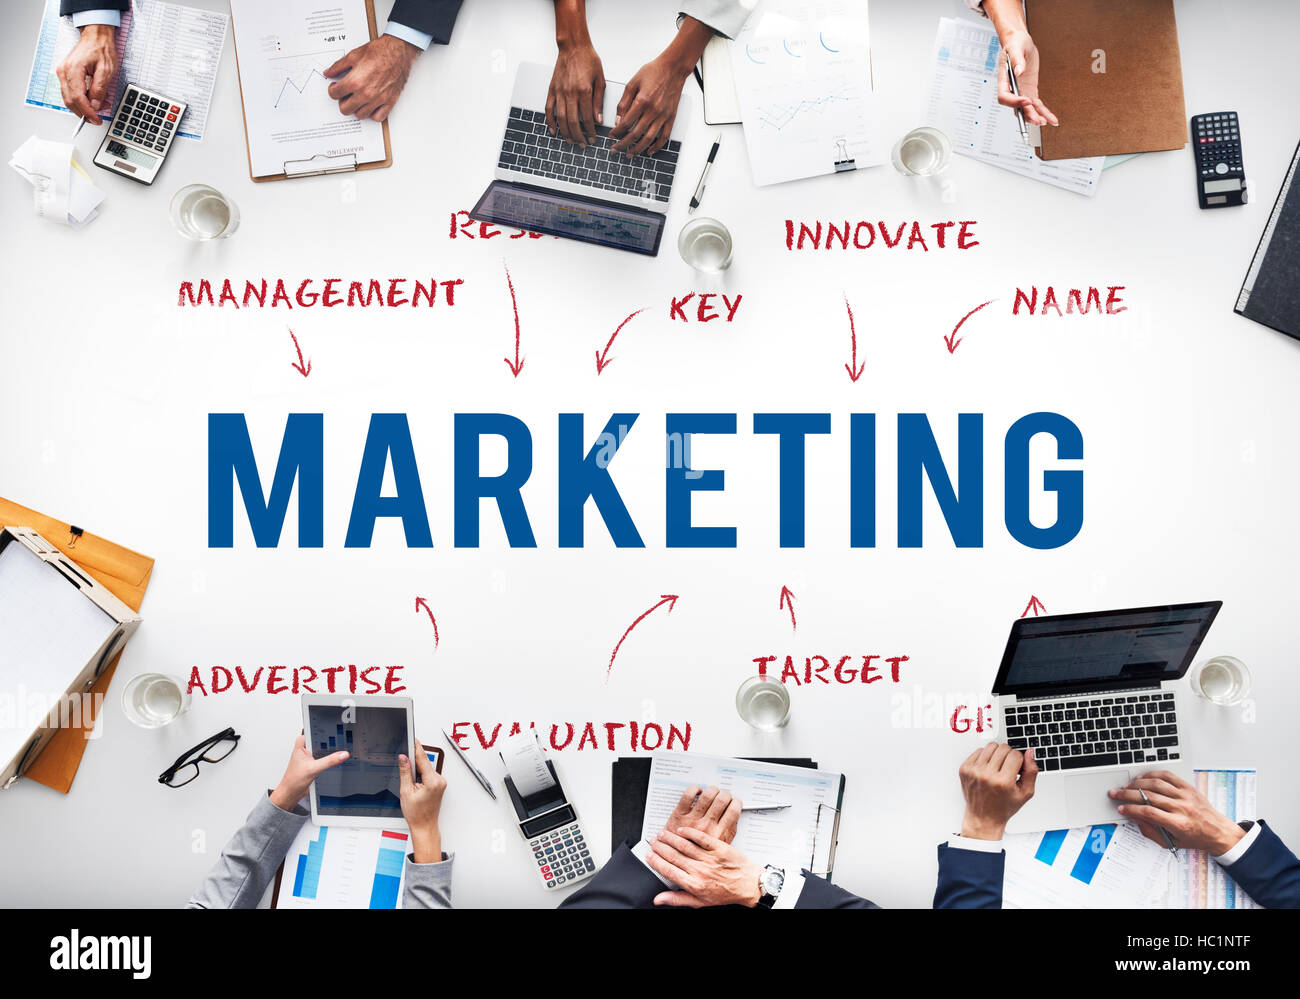 Marketing Business Company Strategy Concept Stock Photo